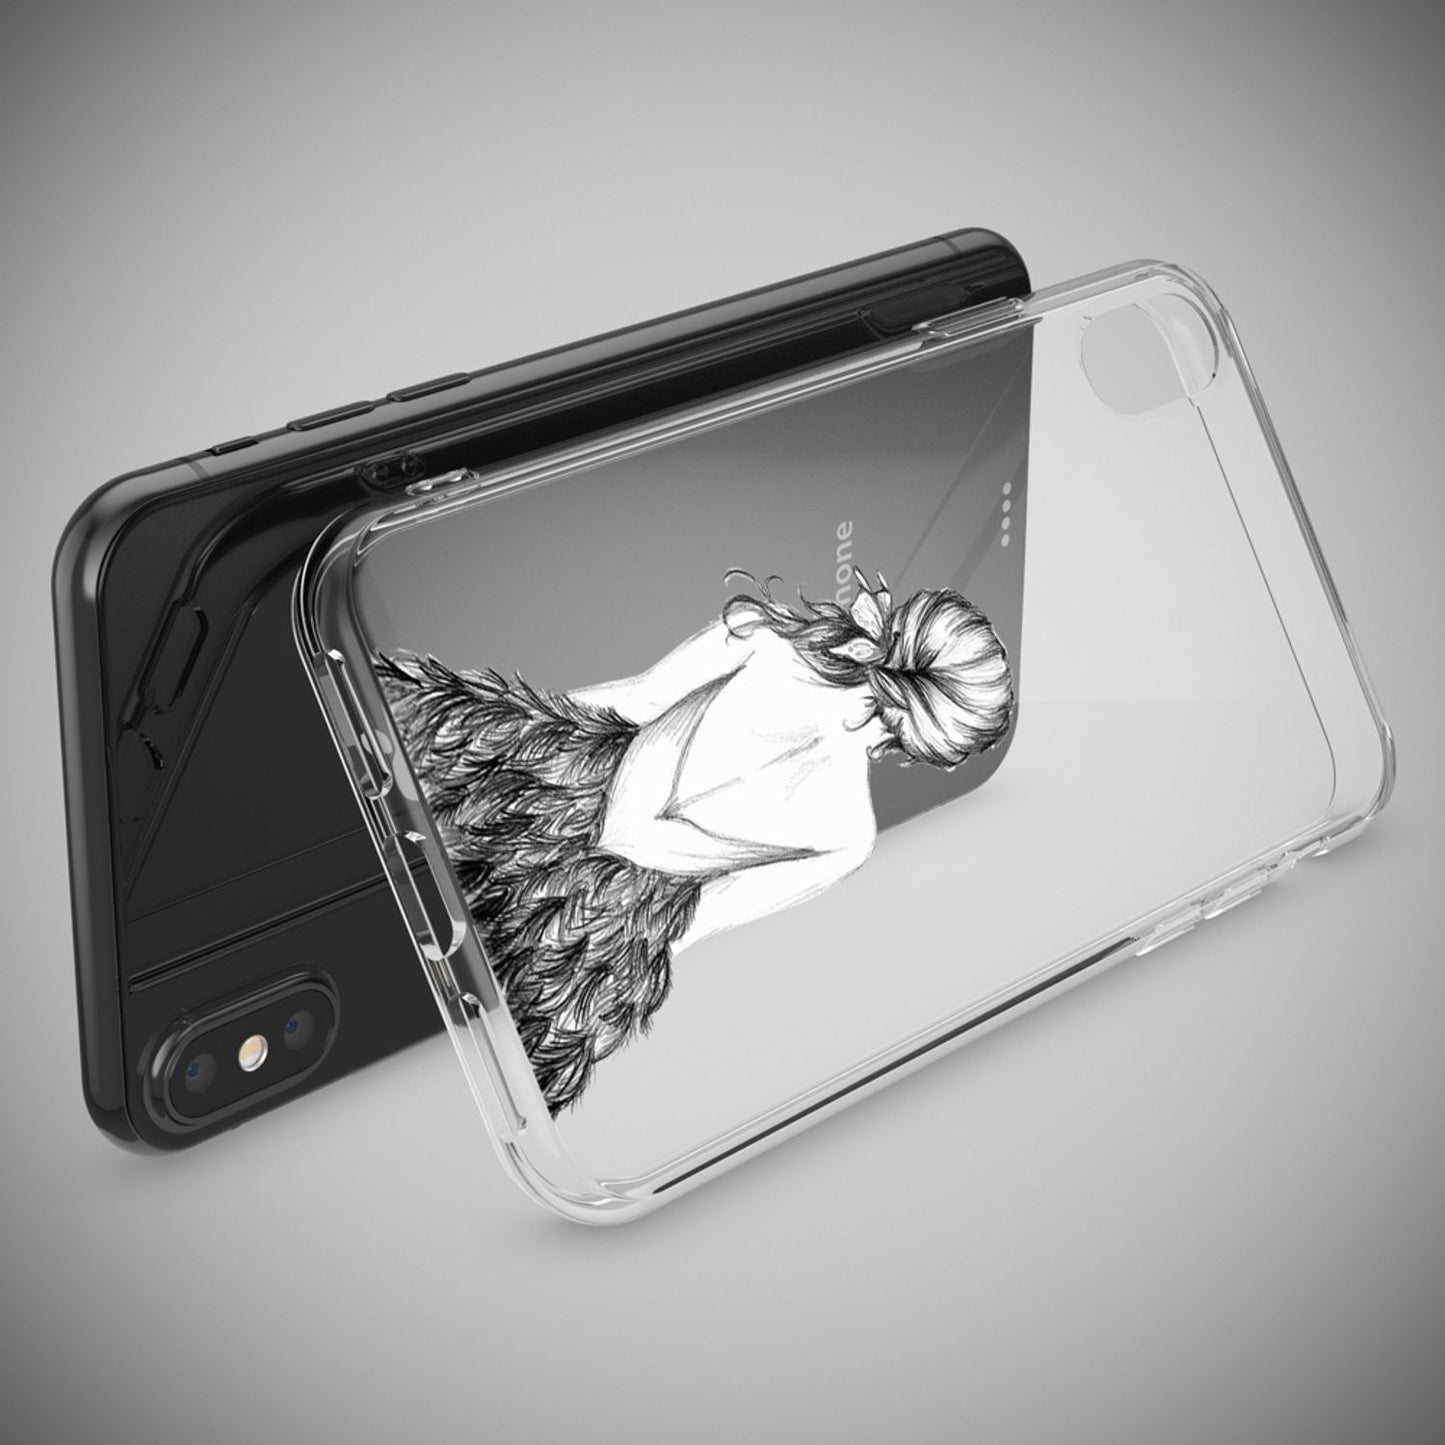 NALIA Hülle für iPhone XS Max, Slim Silikon Motiv Case Cover, Schutzhülle Dünn